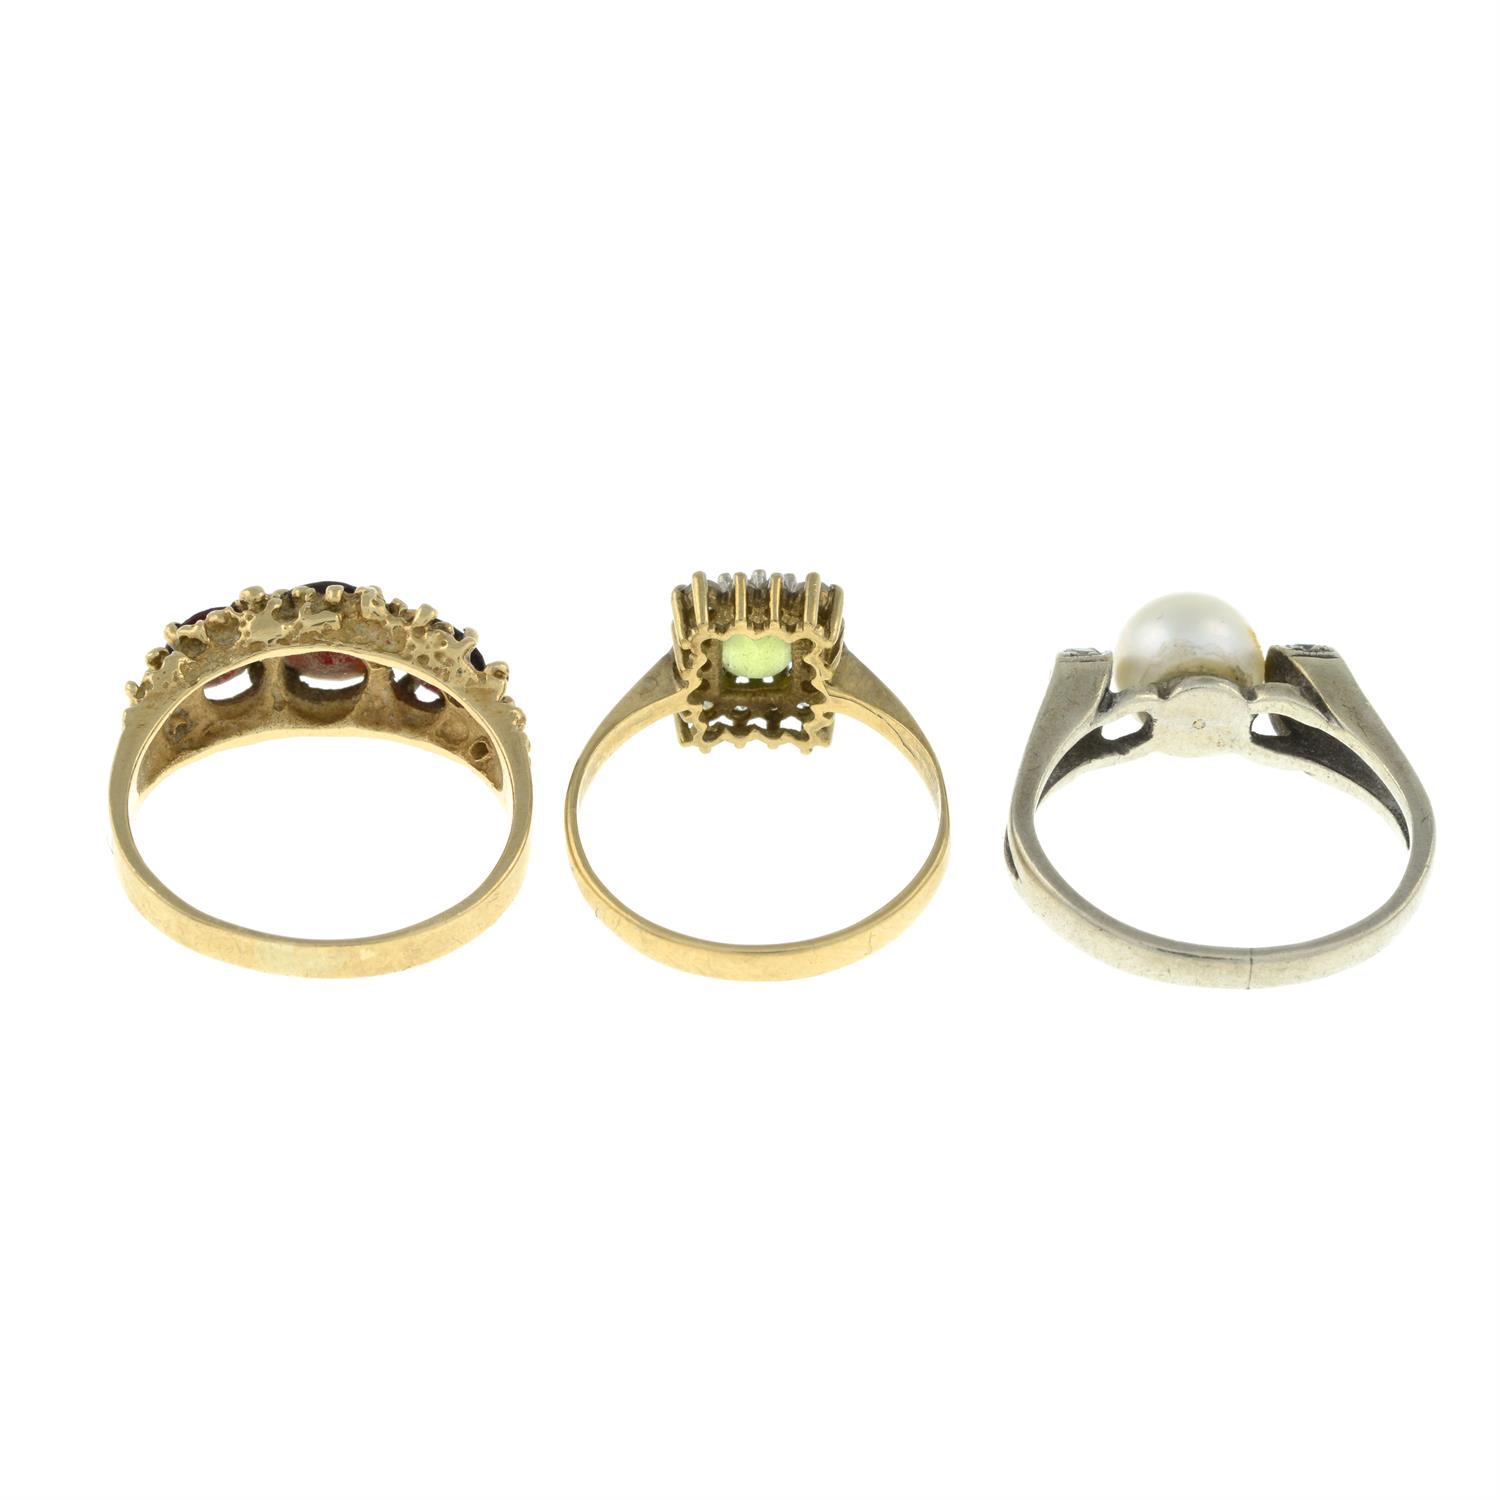 Three 9ct gold gem rings - Image 2 of 2